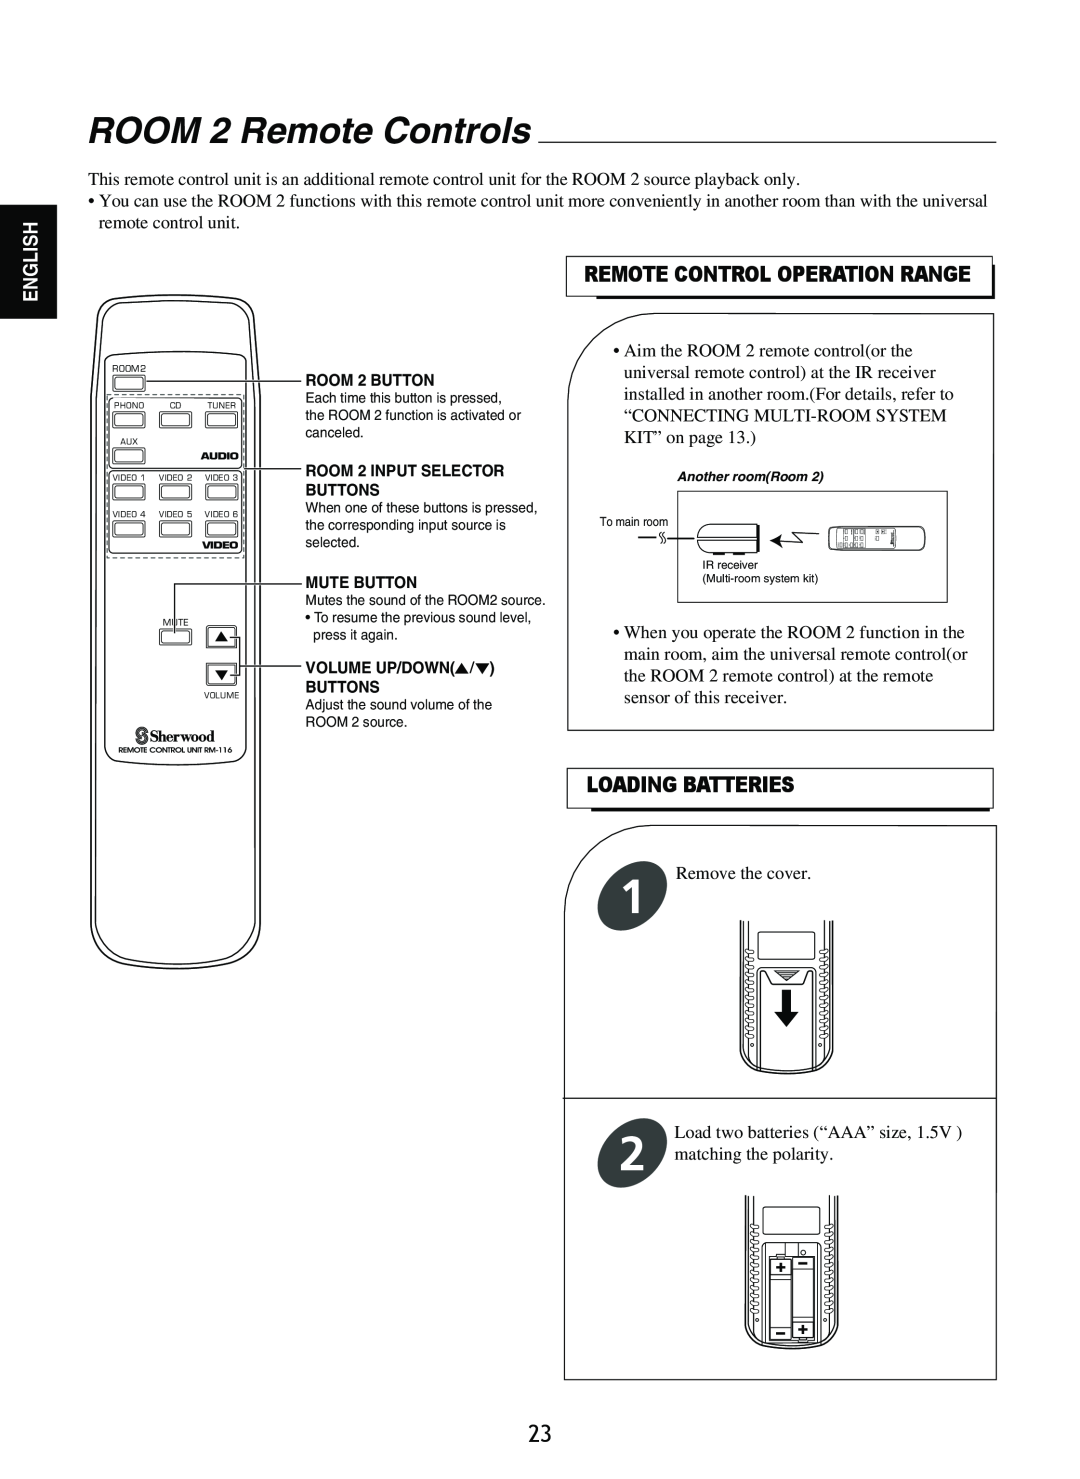 Sherwood R-965 manual ROOM 2 Remote Controls, Remote Control Operation Range, Loading Batteries, English 